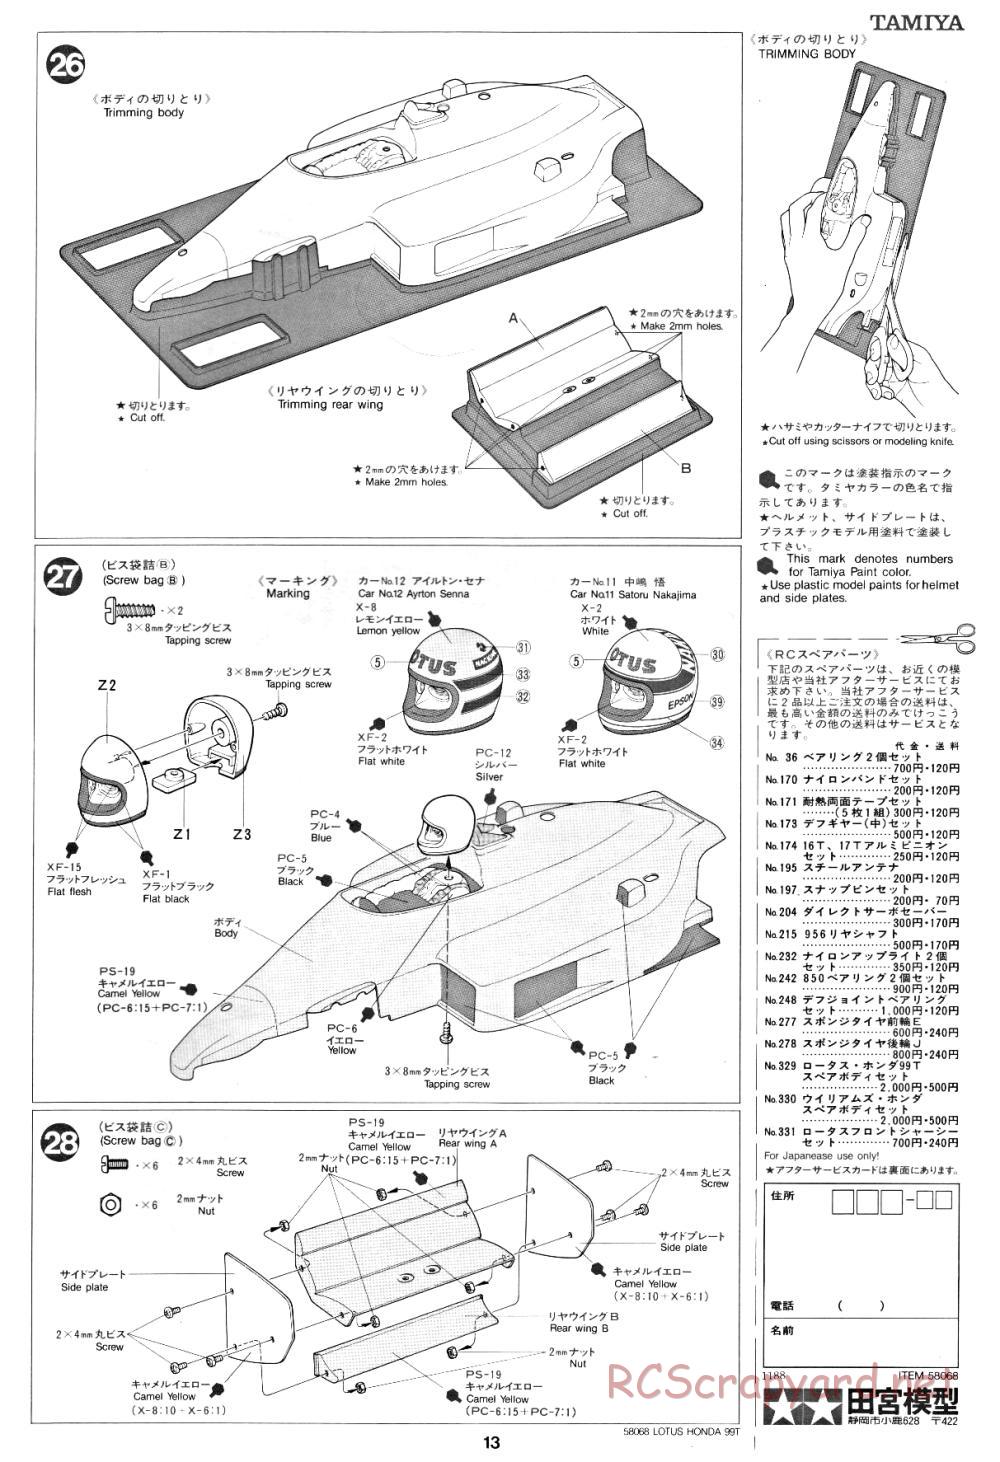 Tamiya - Lotus Honda 99T - 58068 - Manual - Page 13